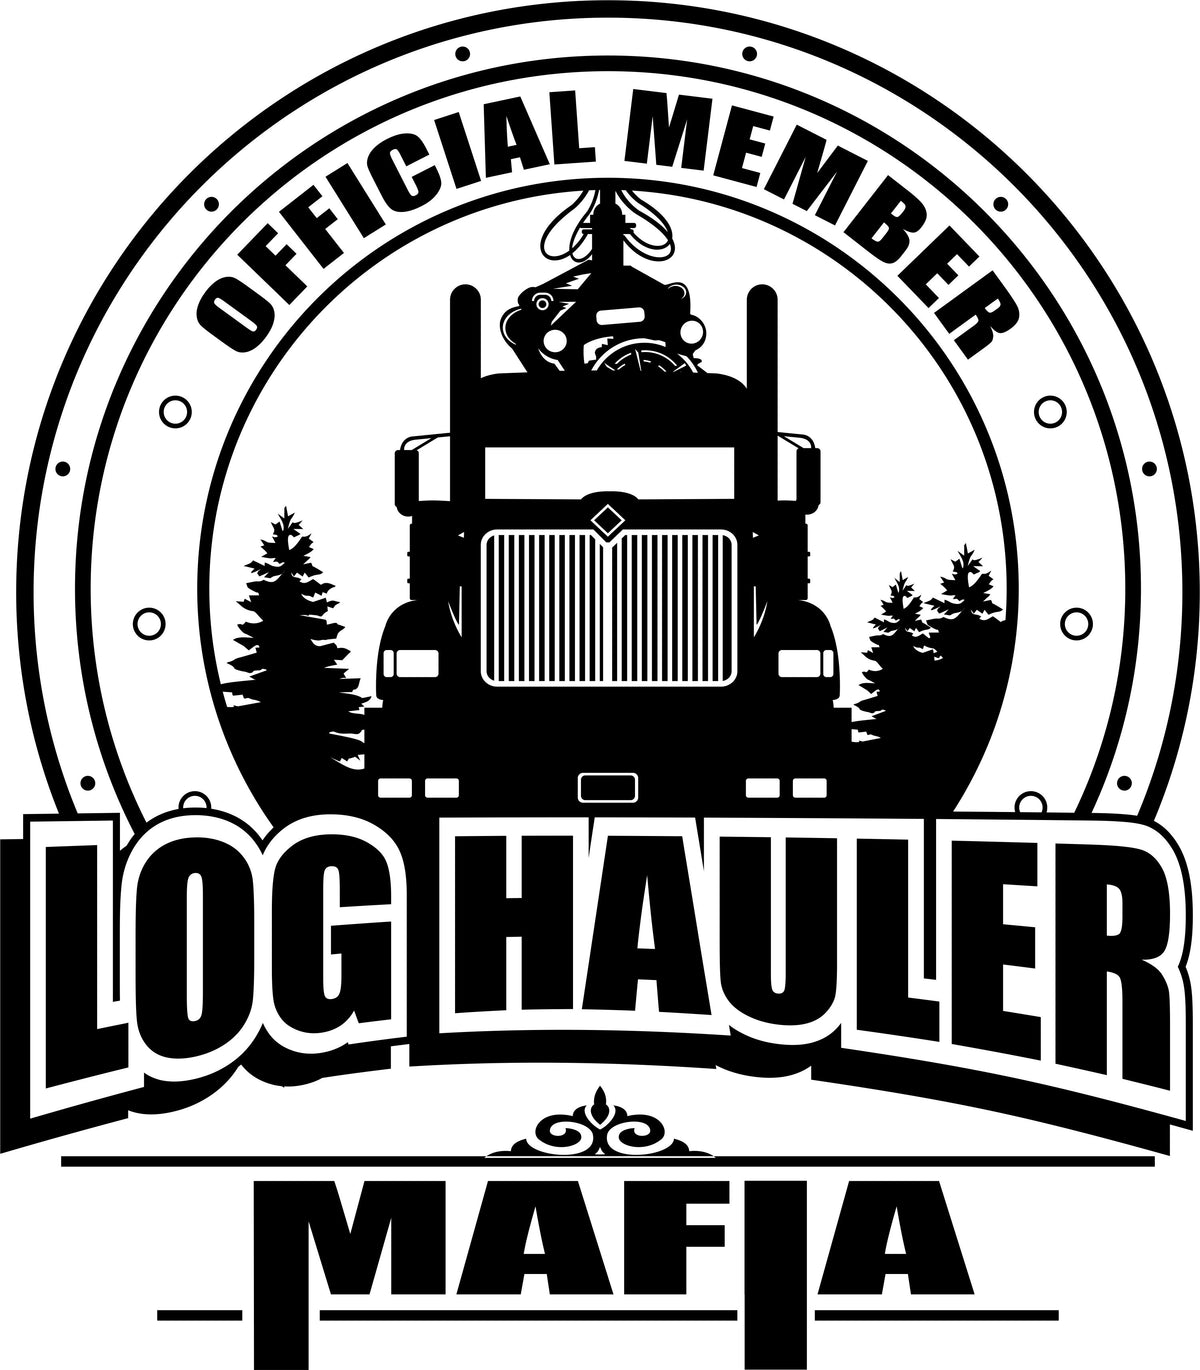 Log Hauler Mafia 9900 Vinyl Decal Free Shipping